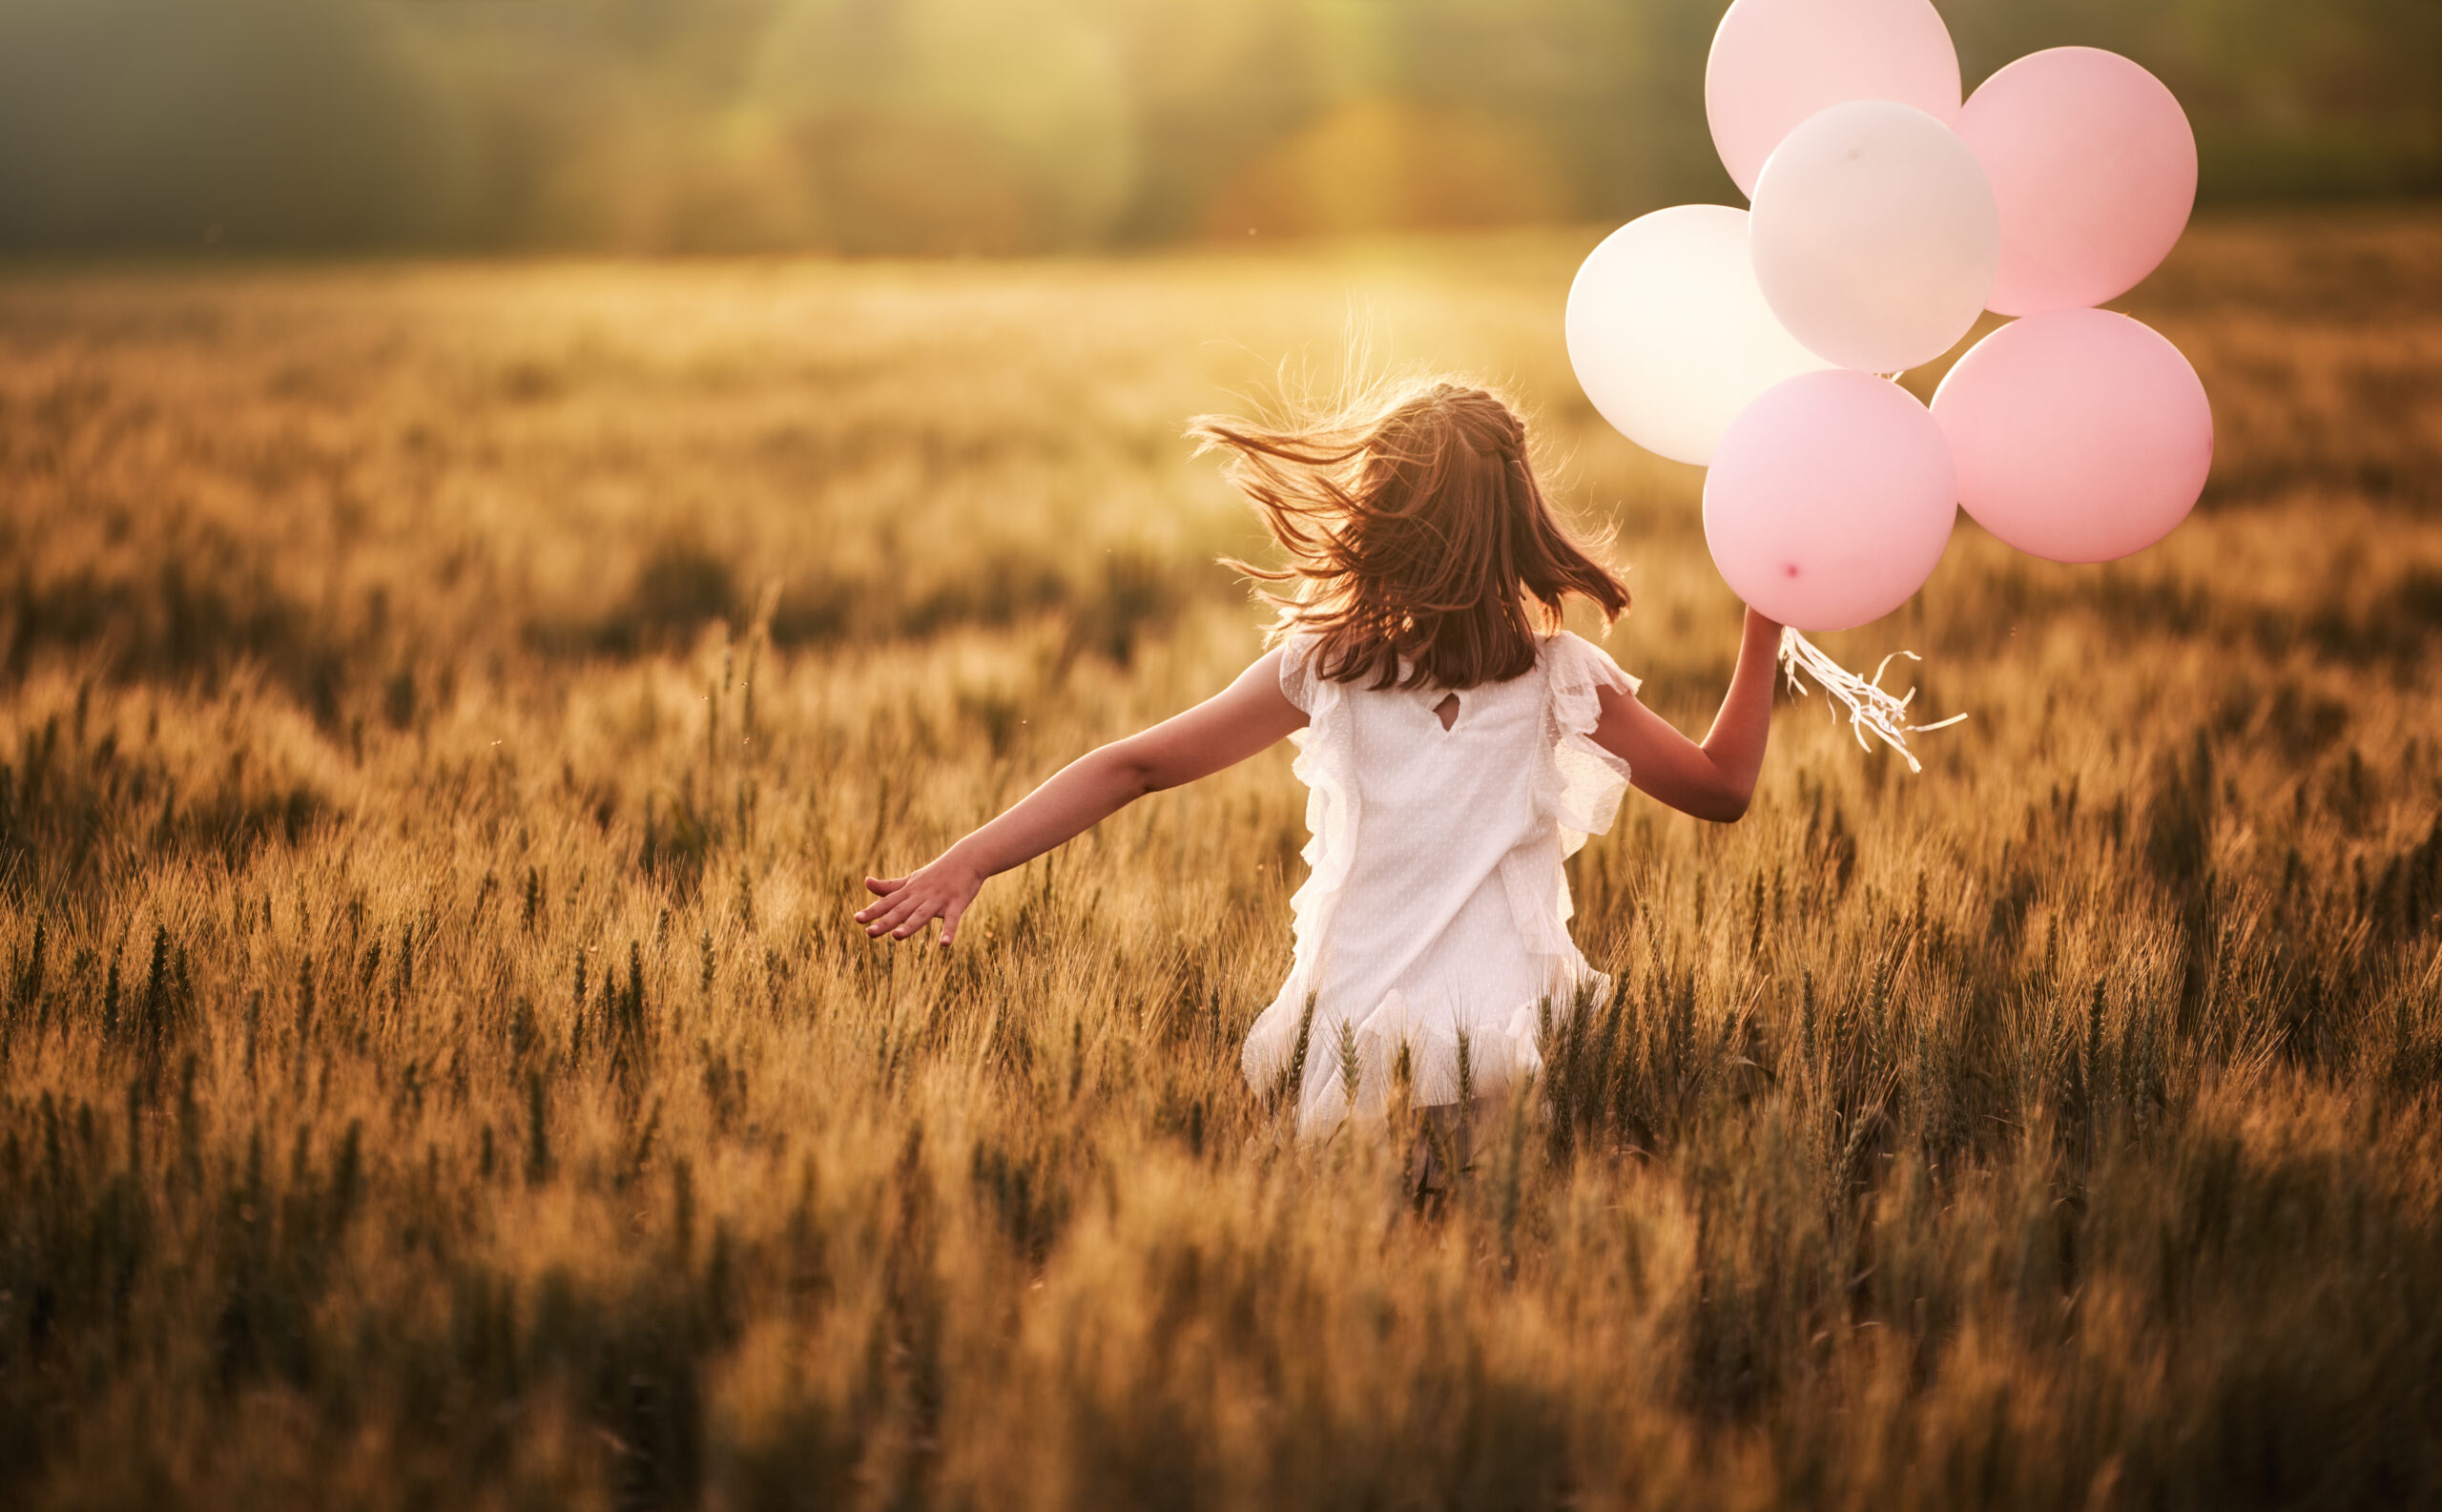 Girl running through field holding pink balloons